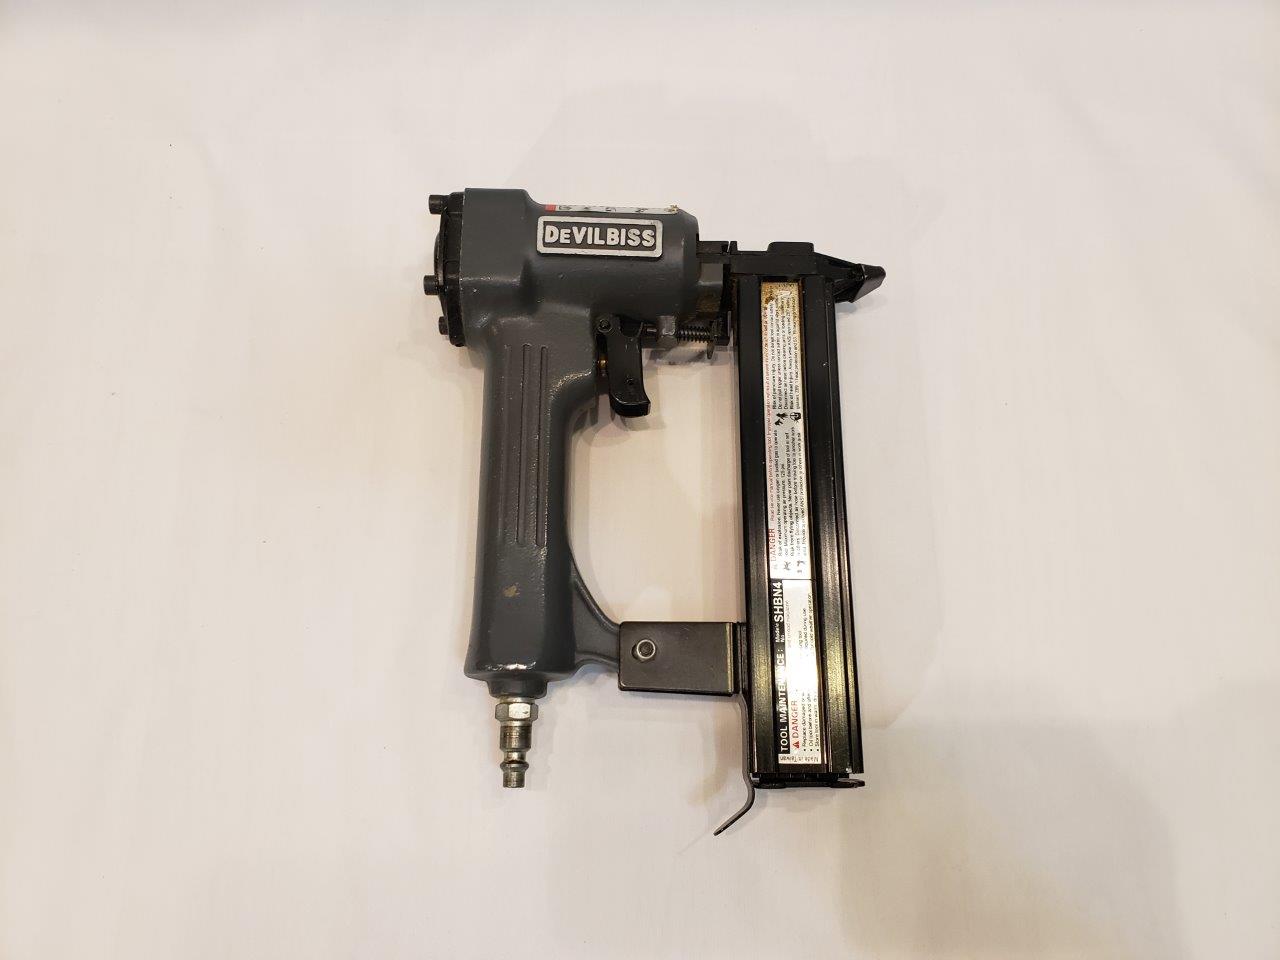 18 Gauge Brad Air Nailer, DeVilbiss Nail Gun Pneumatic fastener